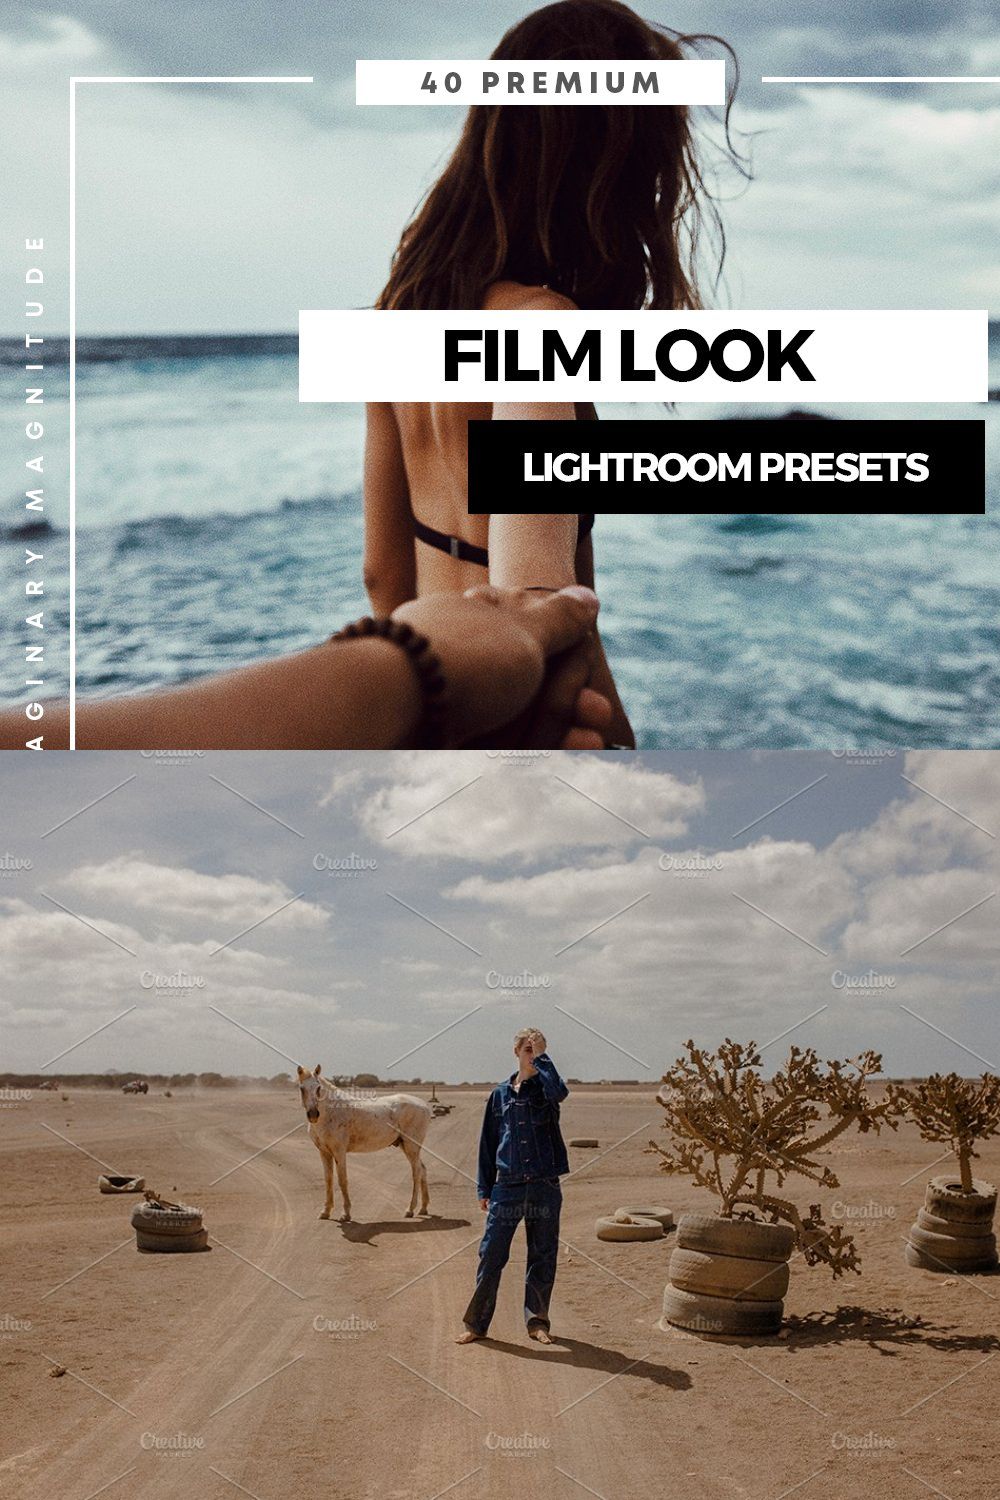 Film Look Lightroom Presets pinterest preview image.